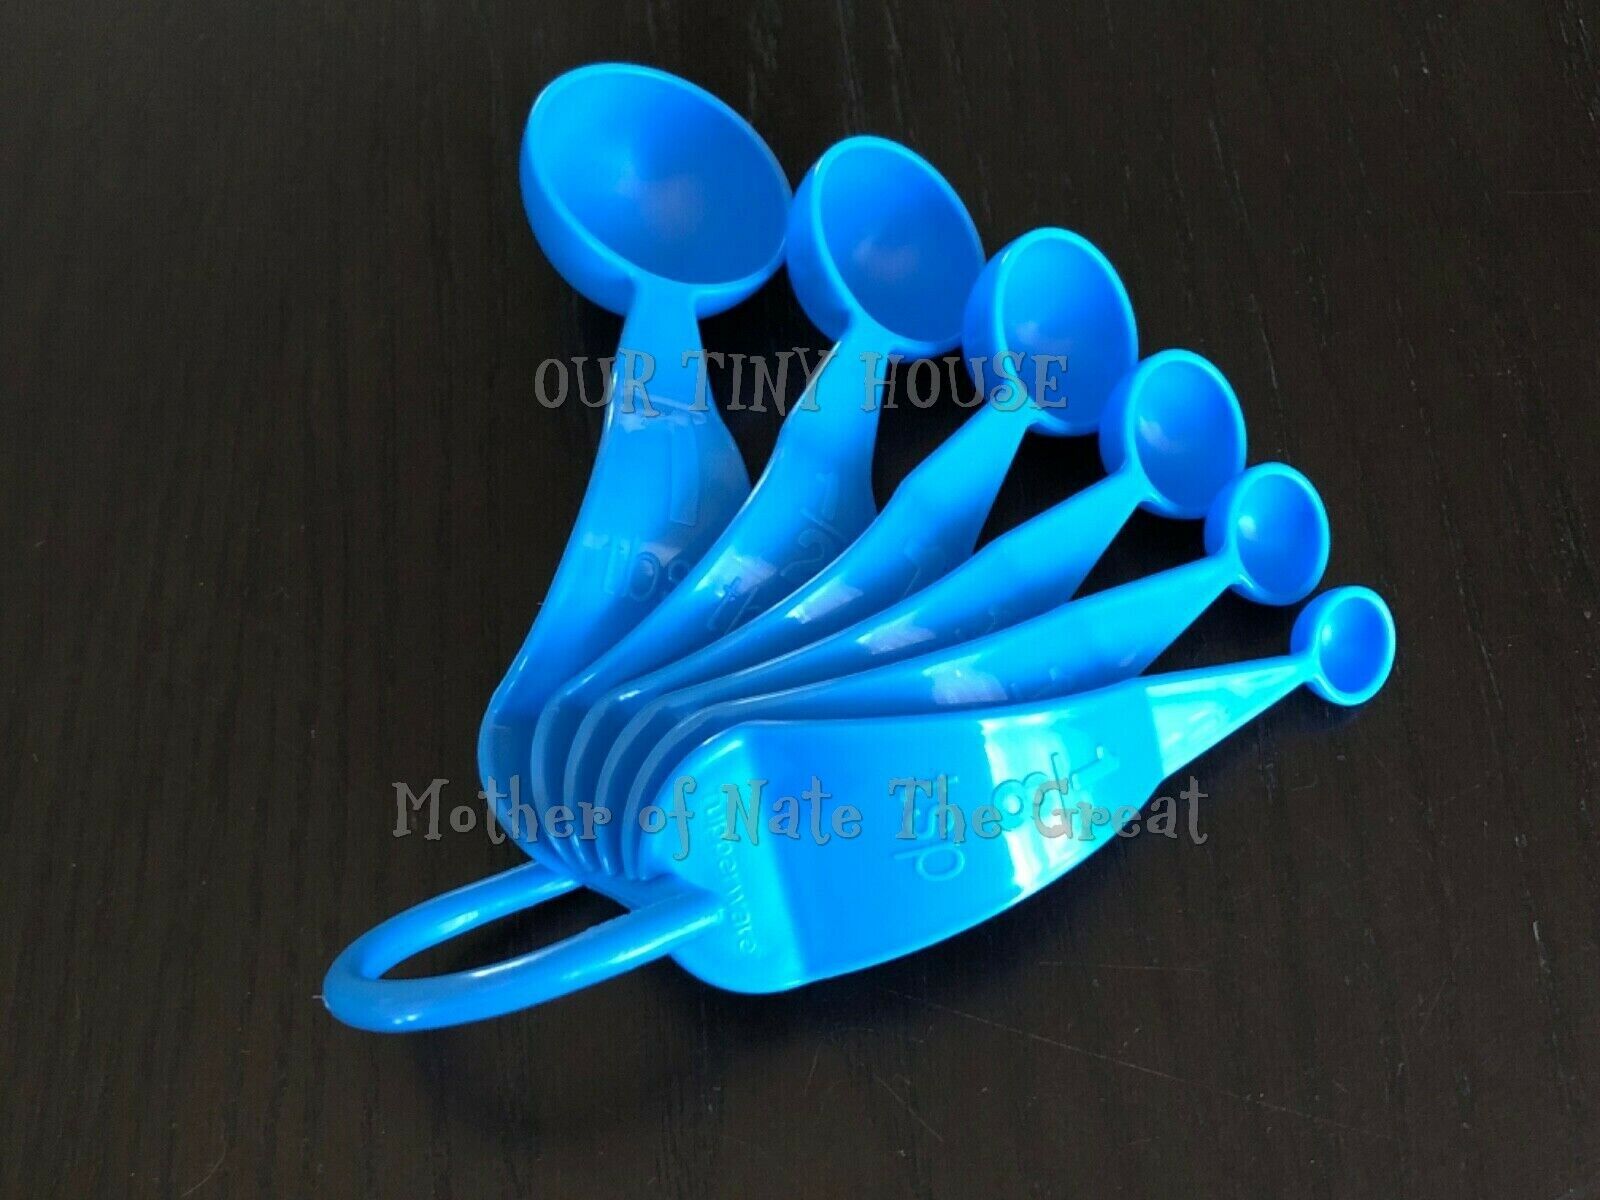 NEW Tupperware Measuring Spoons Set of 6 BLUE Embossed D Ring Cups Baking Tool